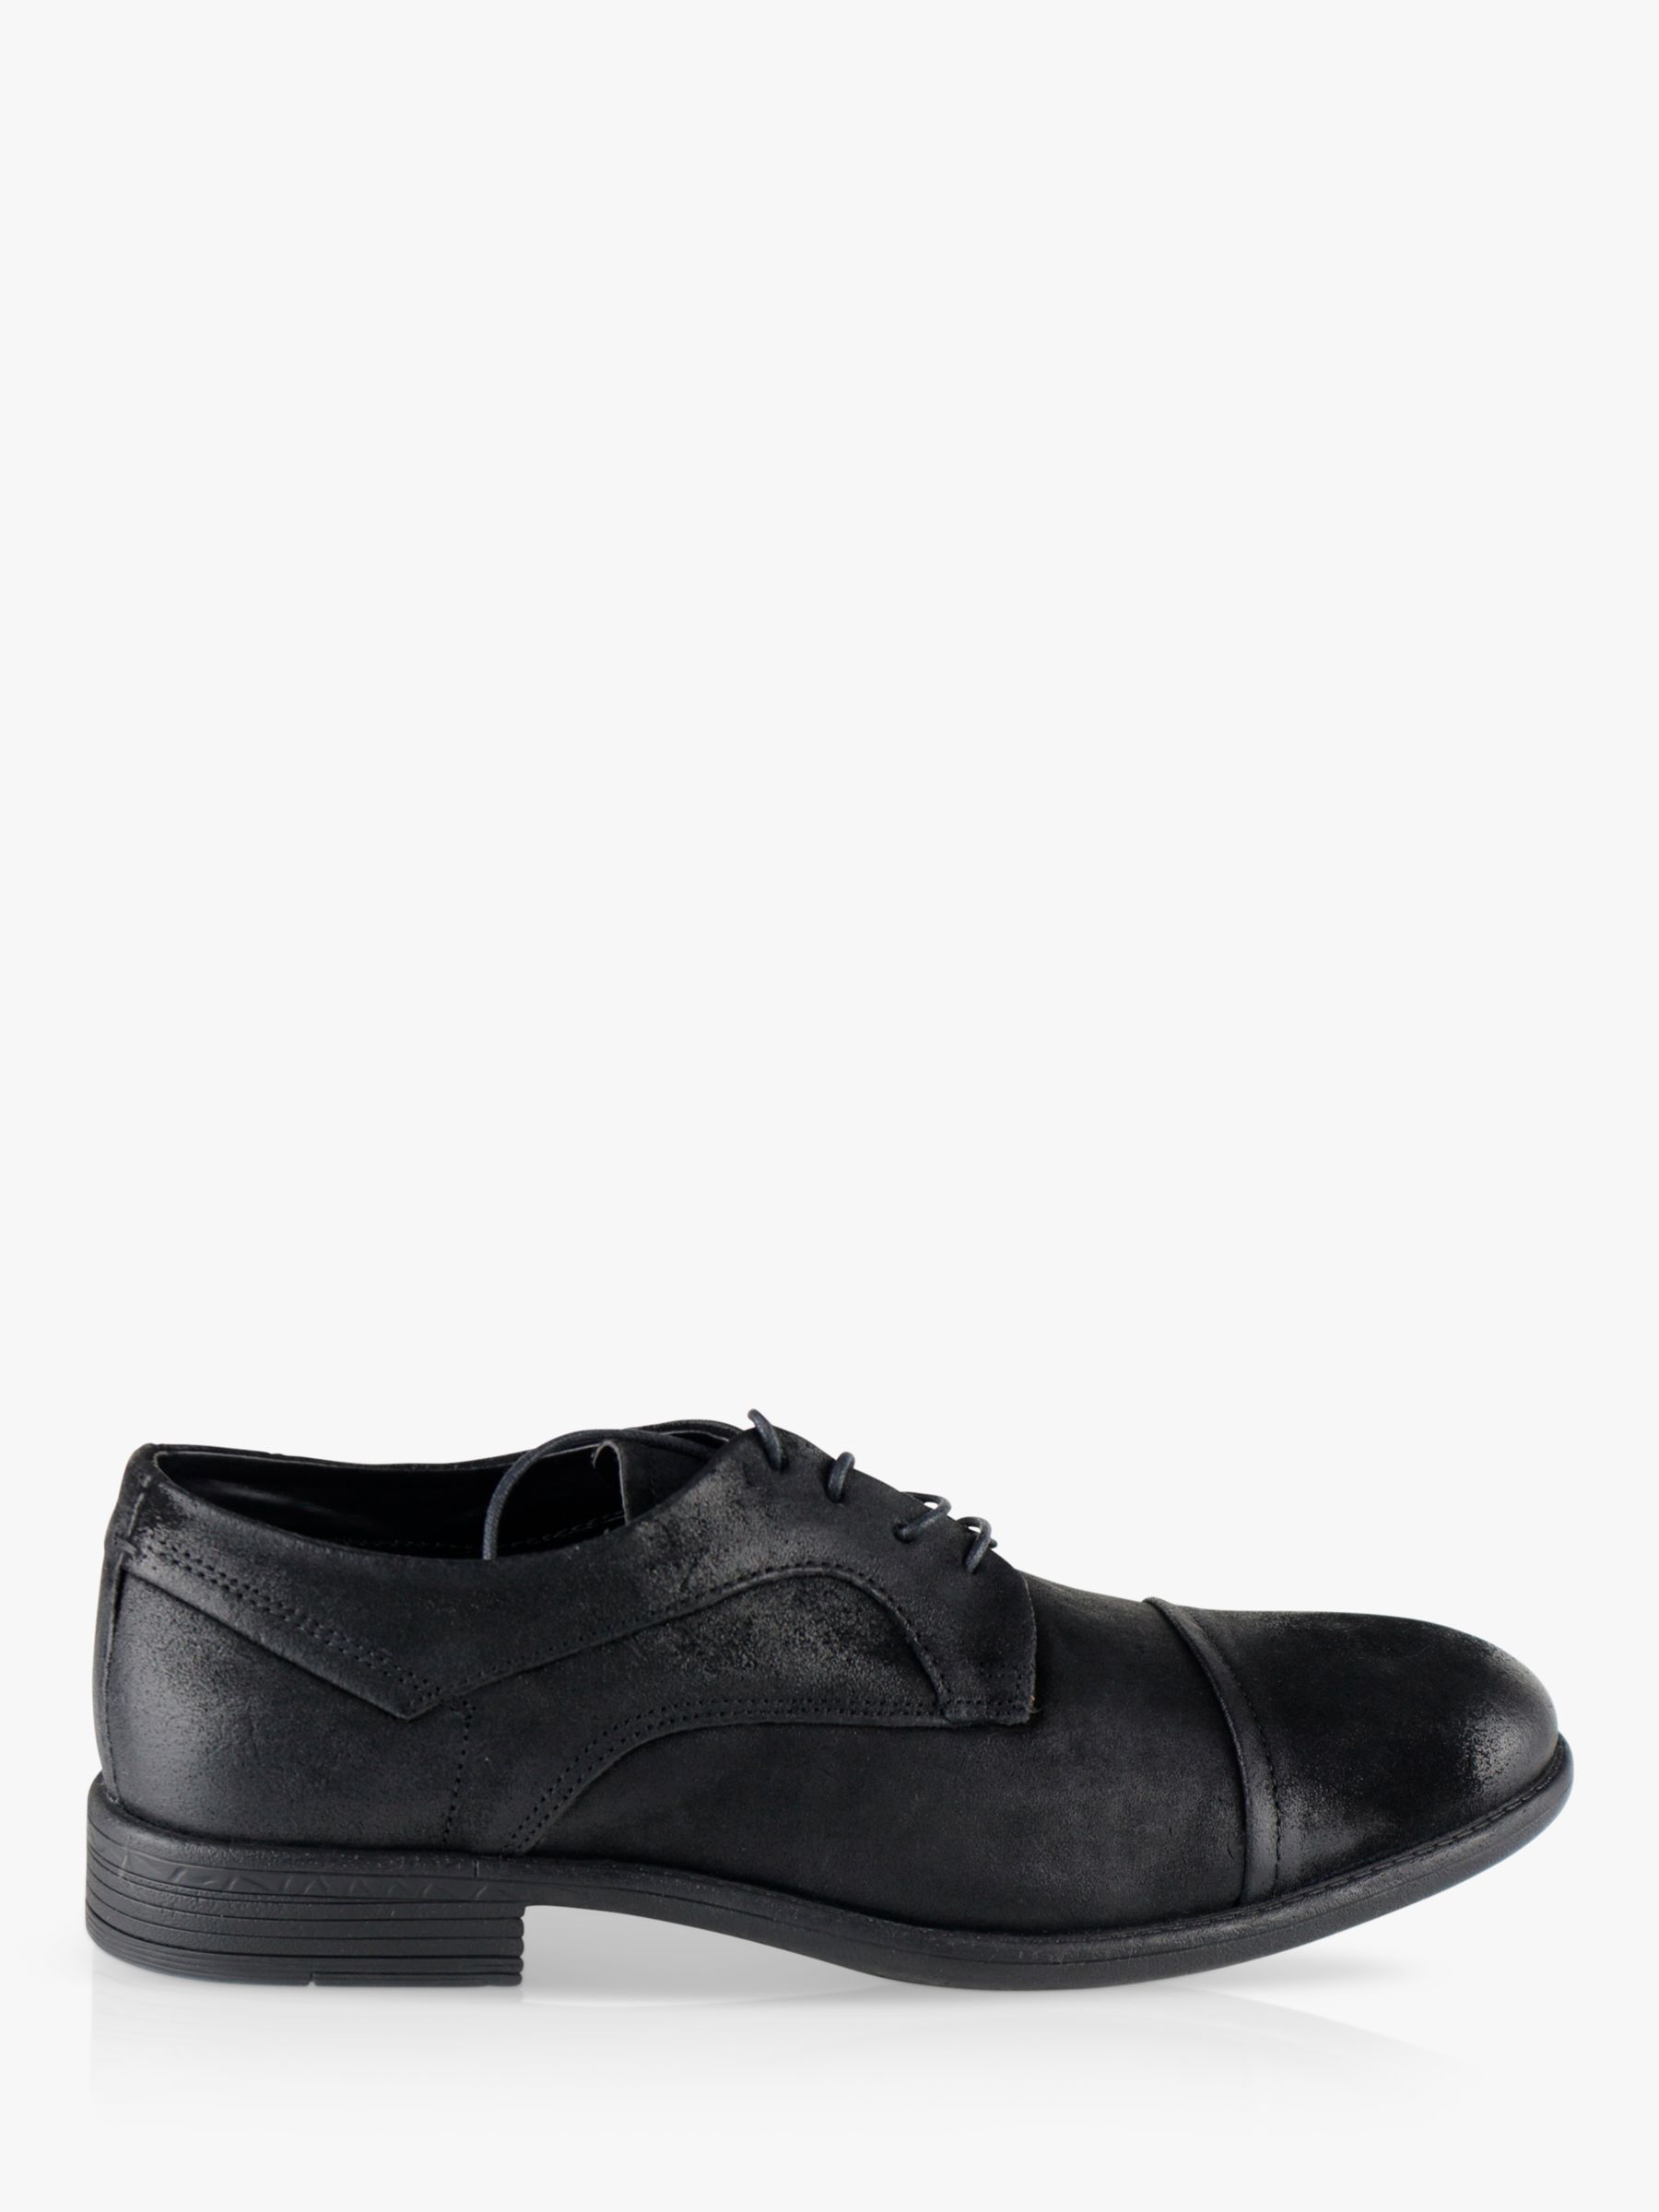 Silver Street London Baldrey Suede Derby Shoes, Black, 7